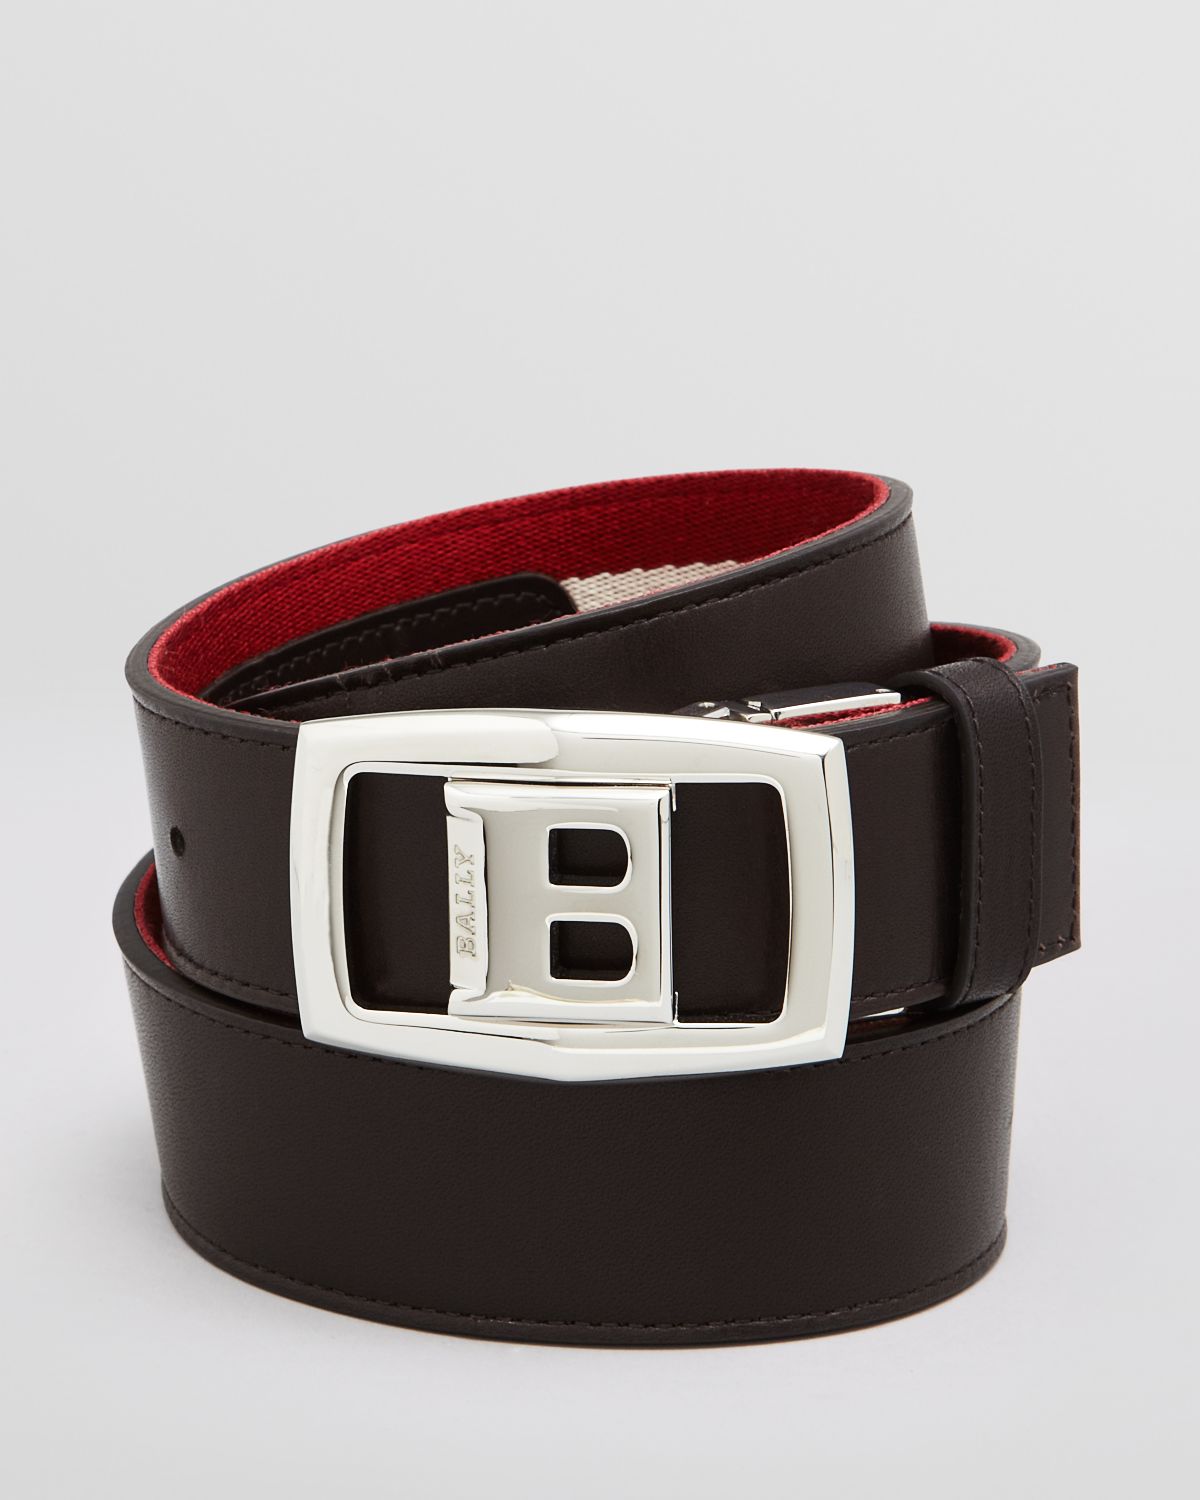 Bally Baldek Buckle Reversible Fabric Belt in Chocolate/Red/Beige ...